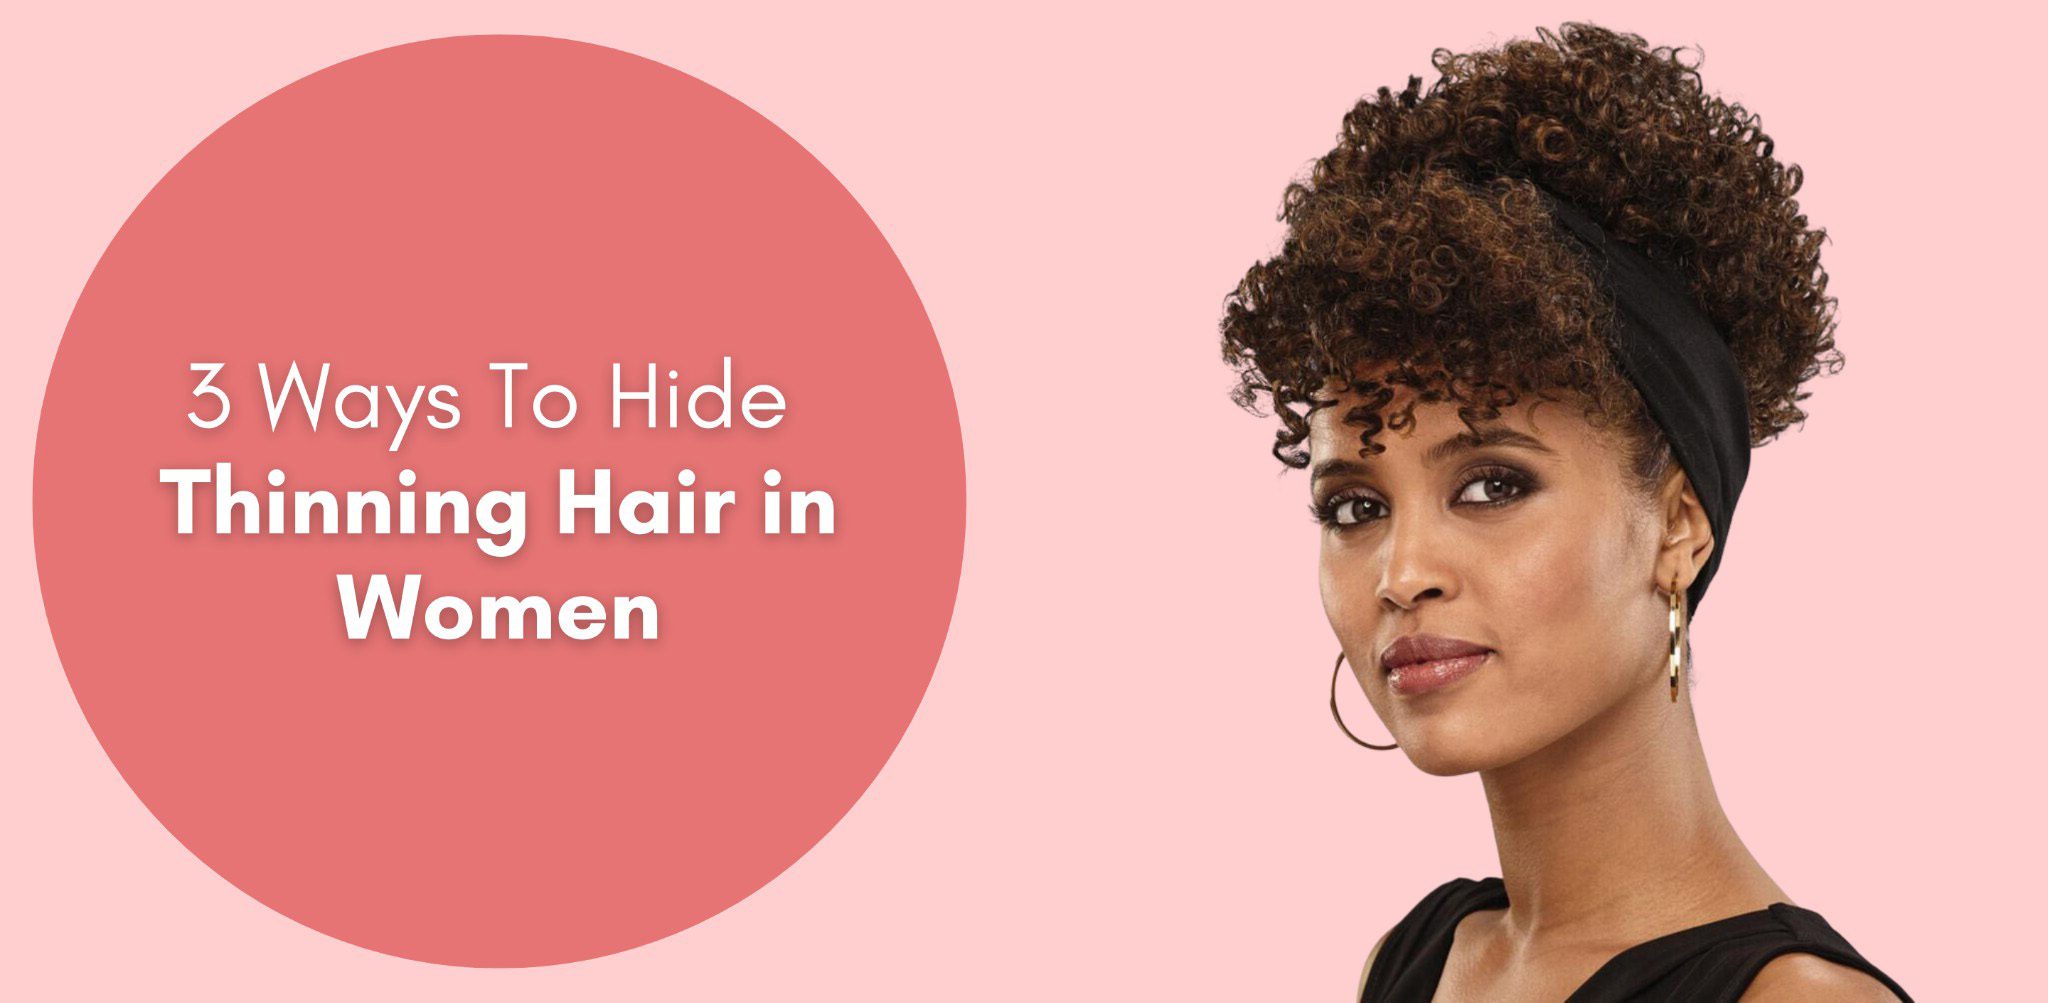 3 ways to hide thinning hair in women